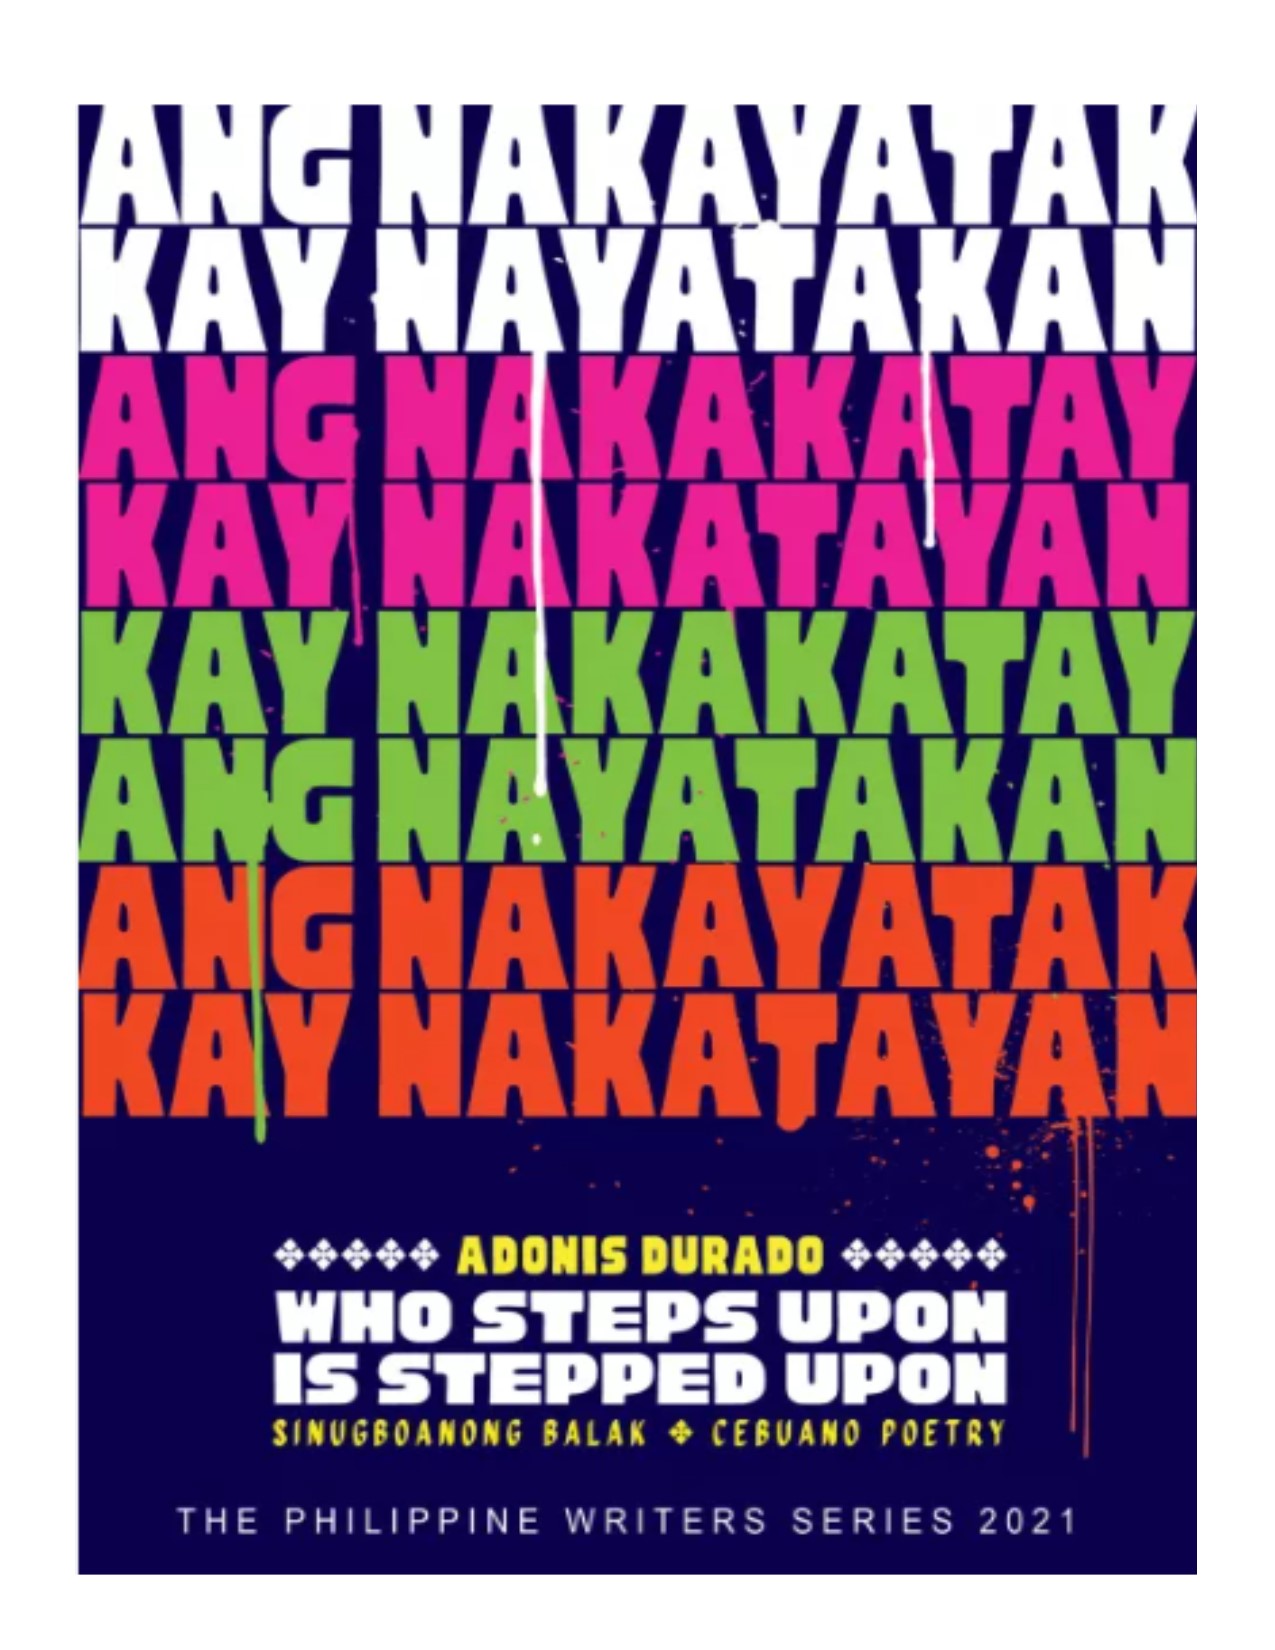 Ang nakayatak kay nayatakan balak = Who steps upon is stepped upon : poetry